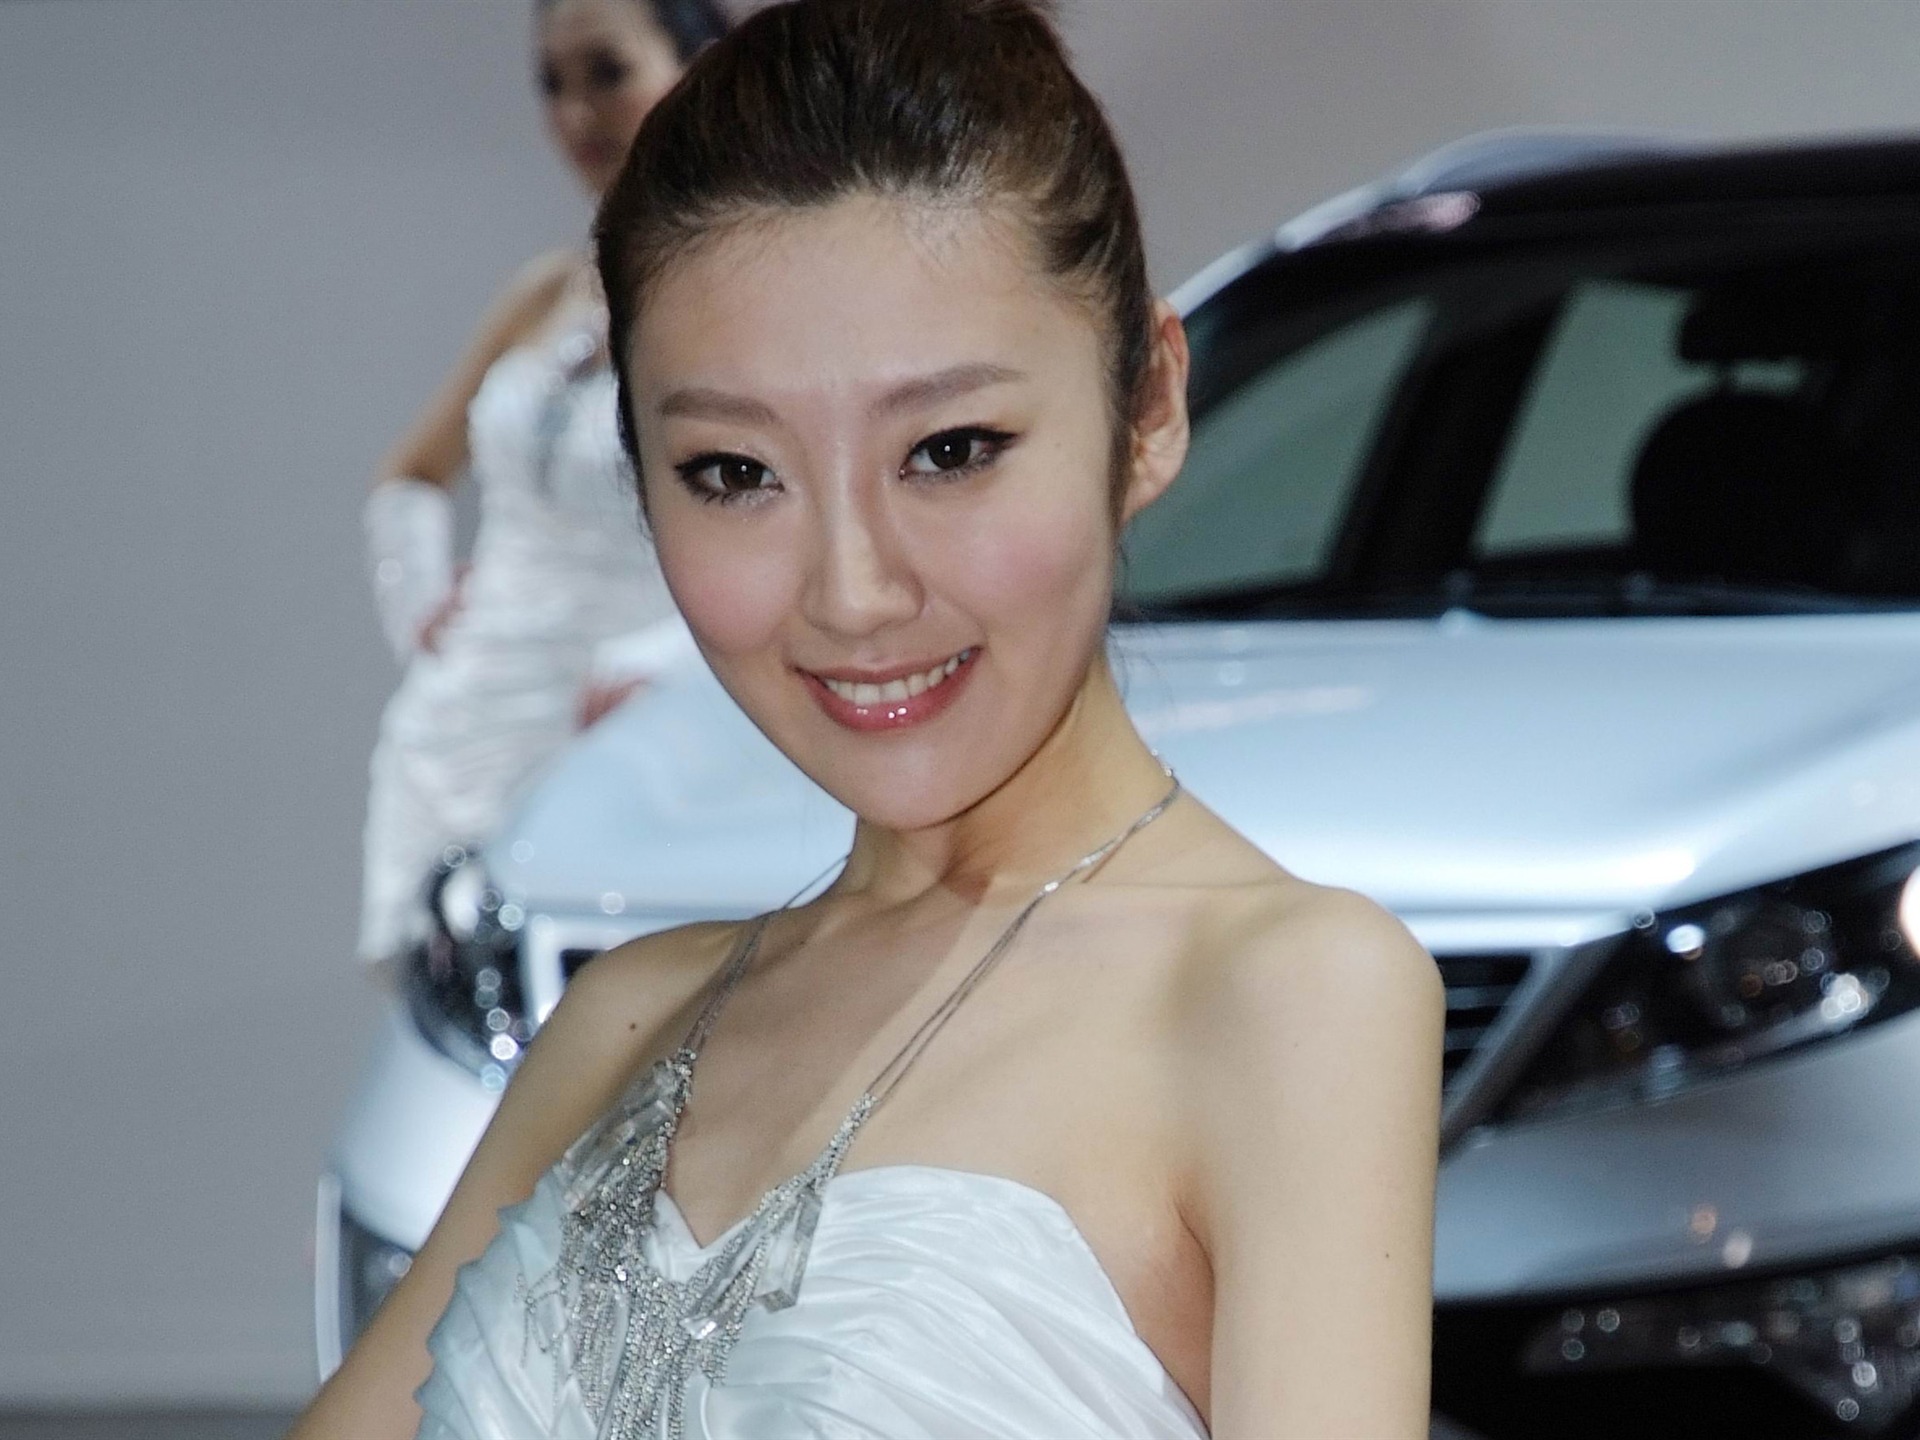 2010 Beijing International Auto Show beauty (rebar works) #21 - 1920x1440